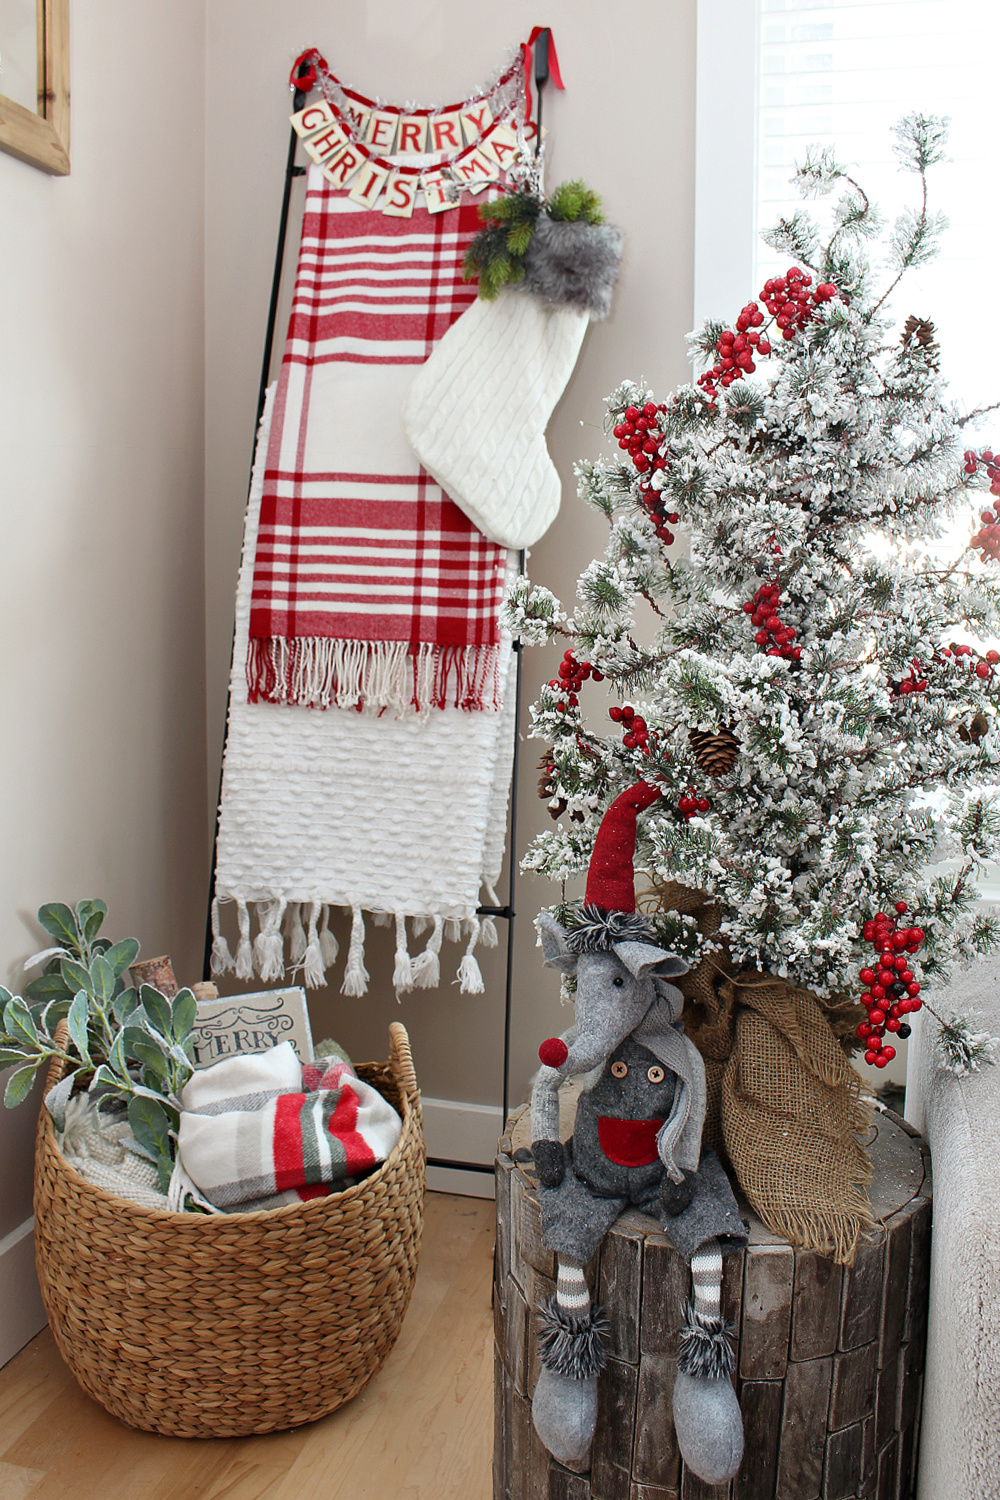 Blanket ladder and basket of blankets in a festive Christmas living room.